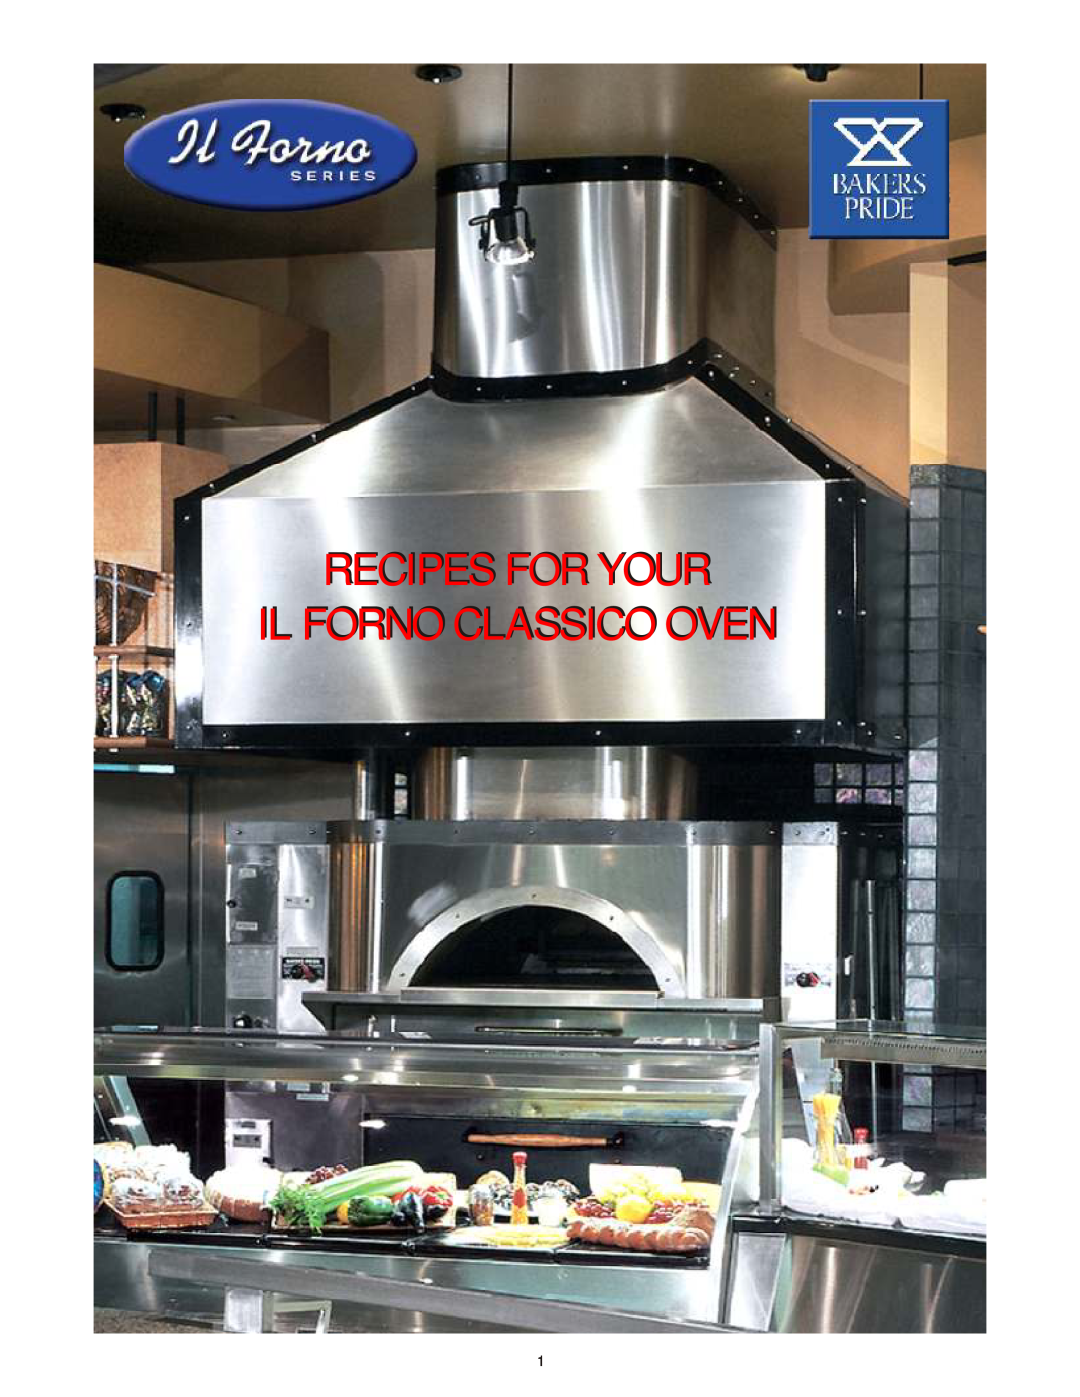 Bakers Pride Oven Classic Oven manual Recipes For Your Il Forno Classico Oven 